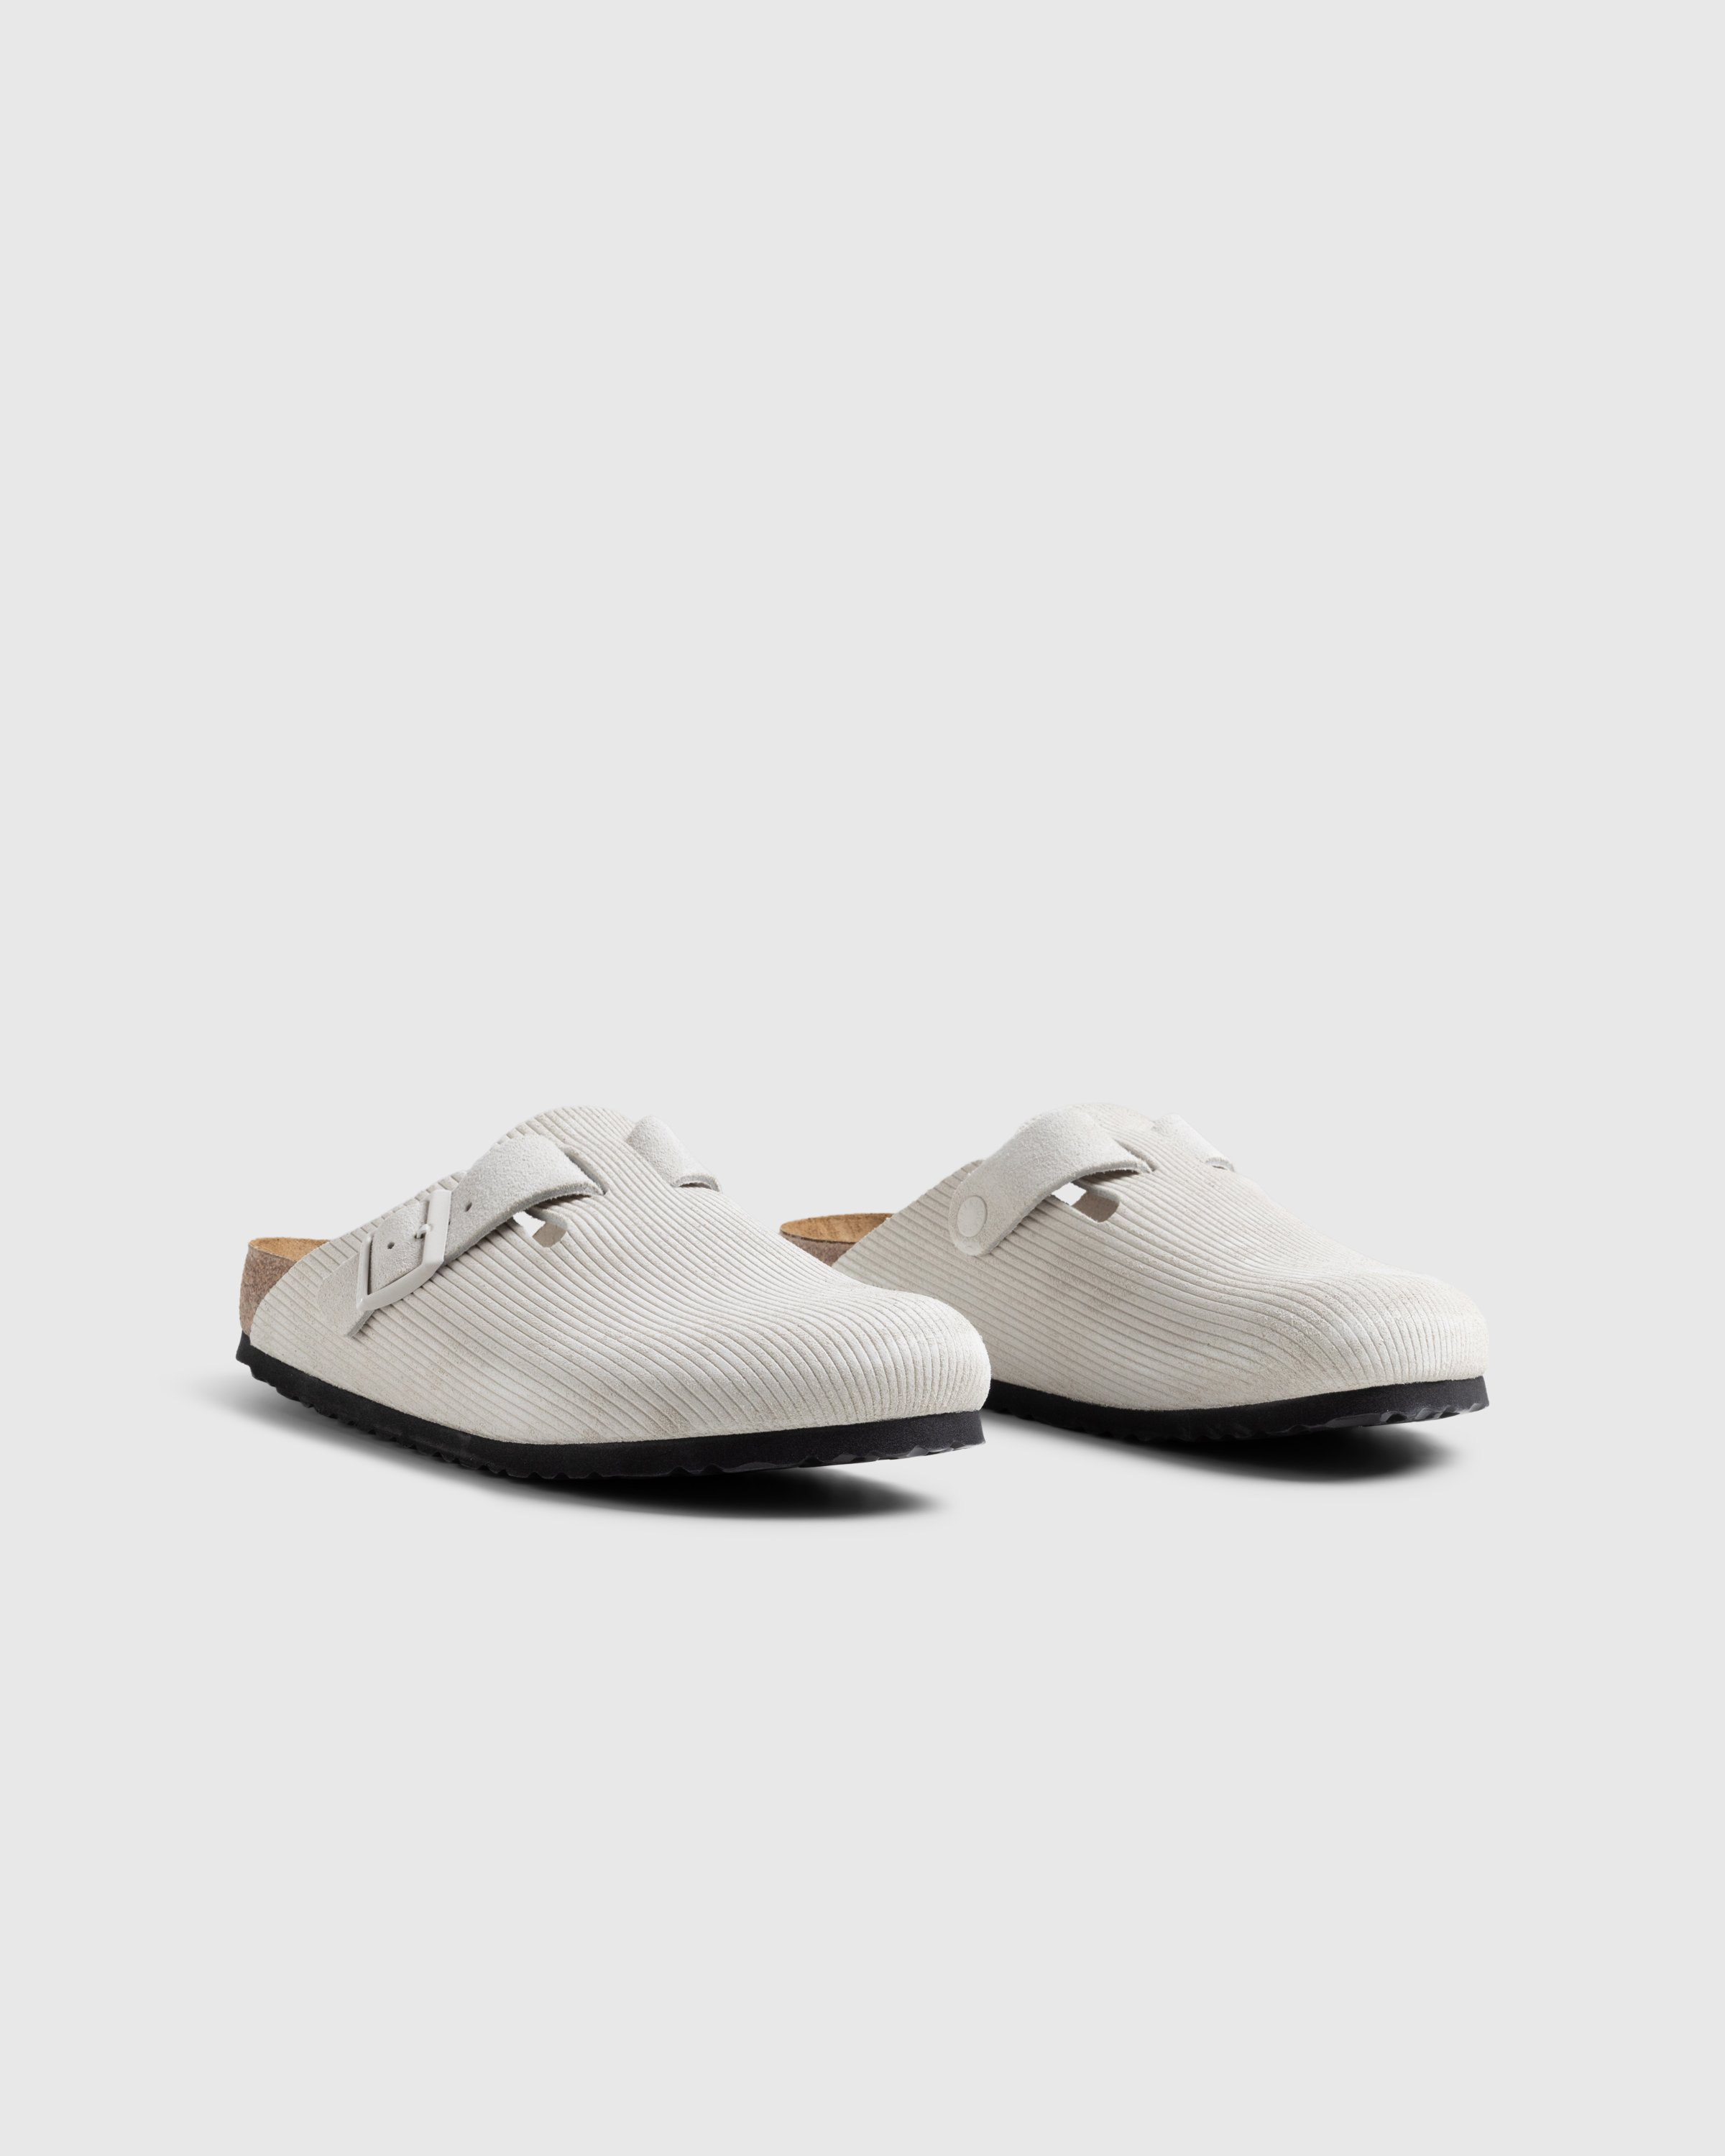 Birkenstock - Boston Suede Leather Corduroy Antique White - Footwear - White - Image 3